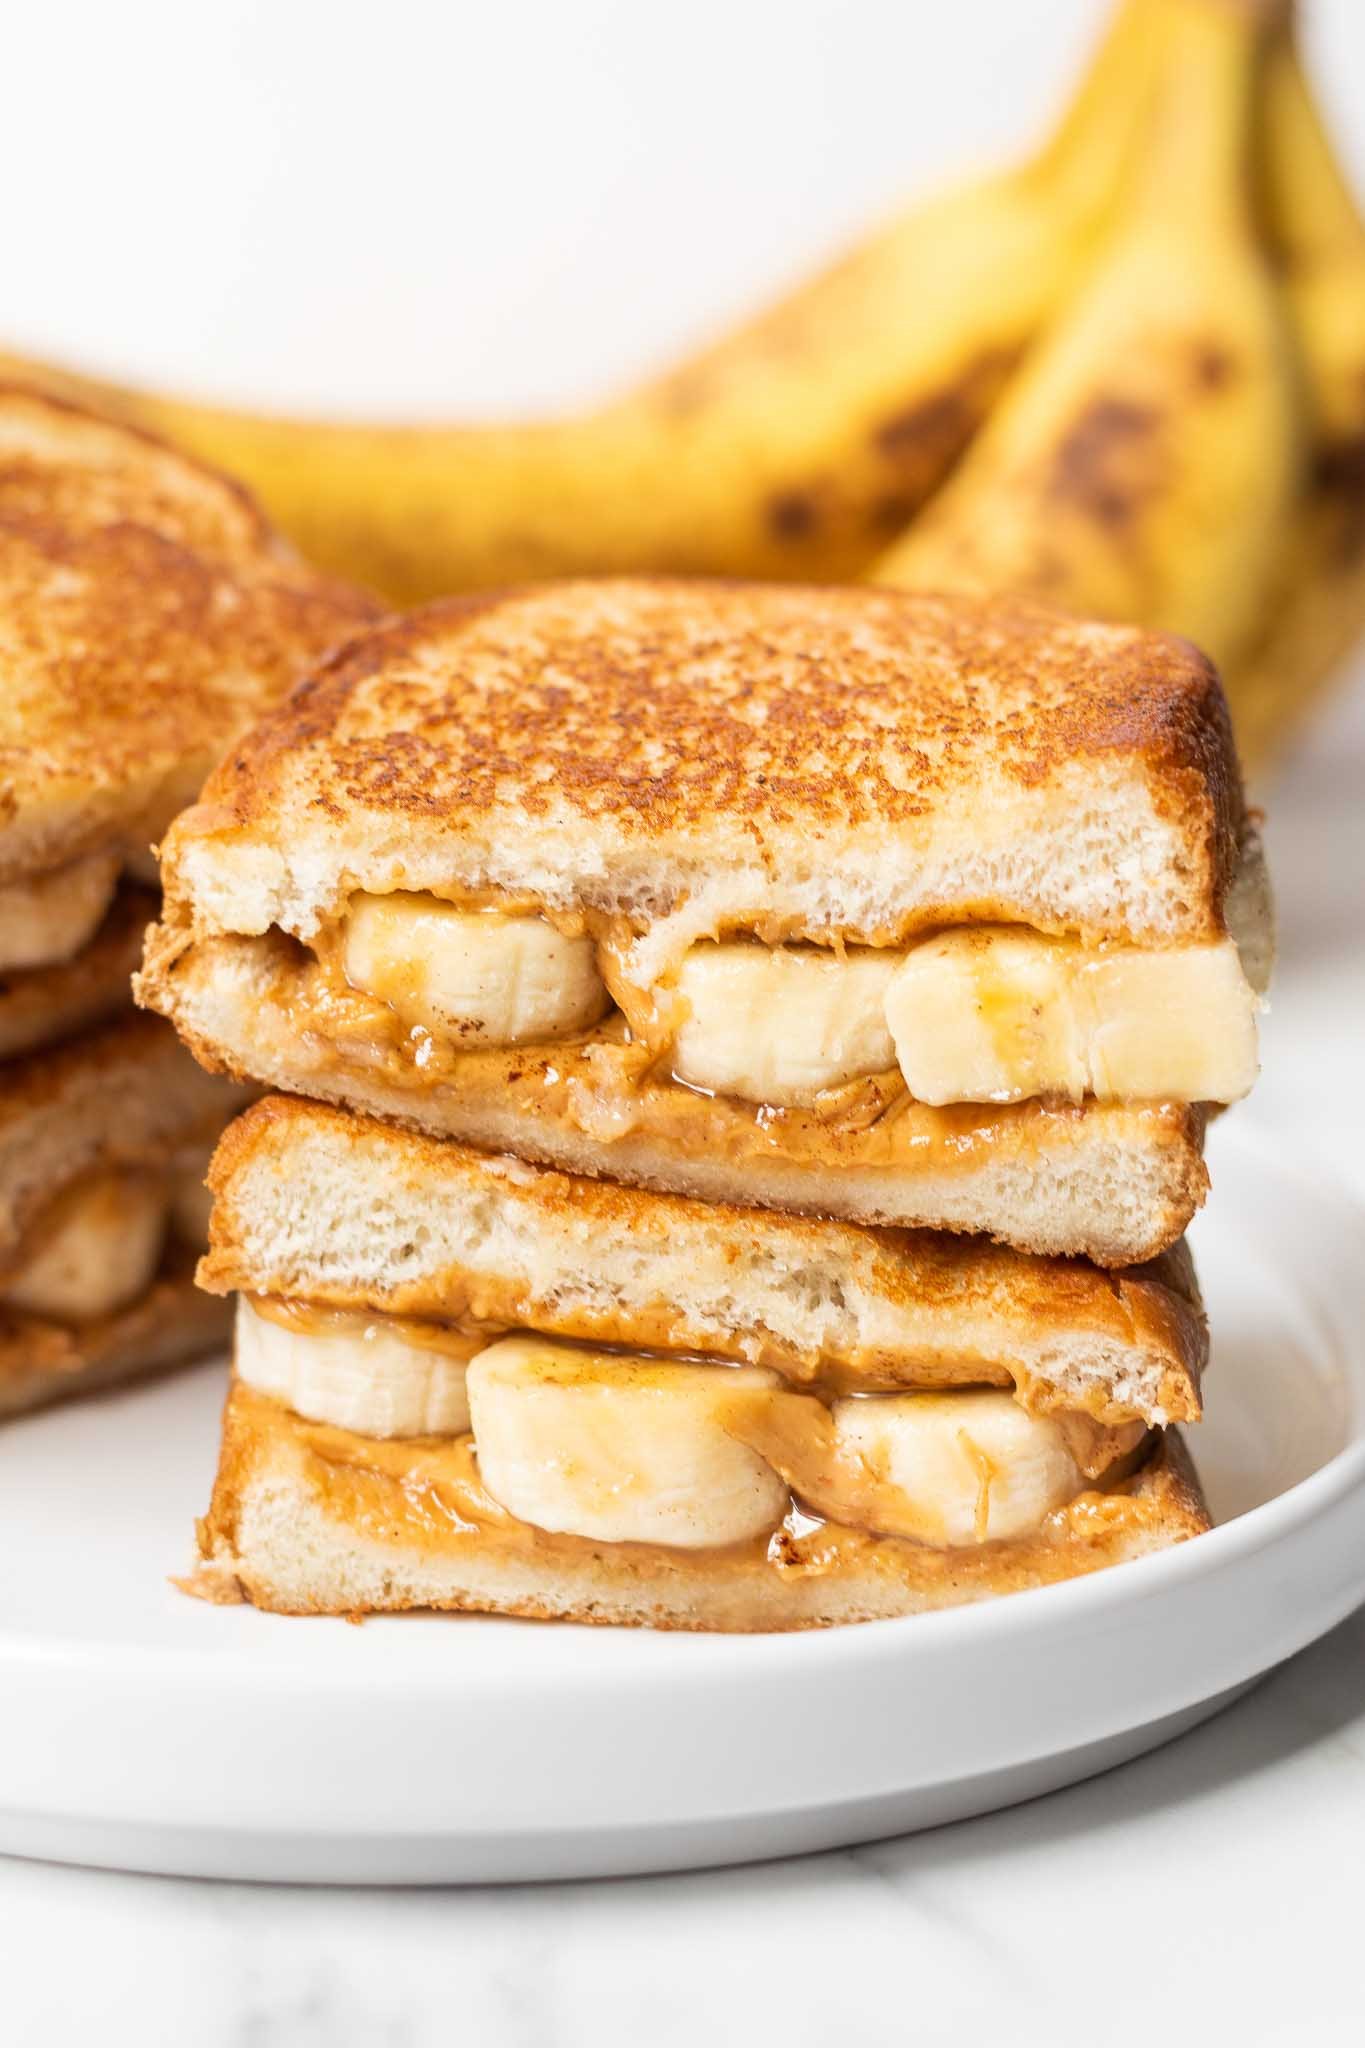 Fried-Peanut-Butter-Banana-Honey-Sandwich-02.jpg